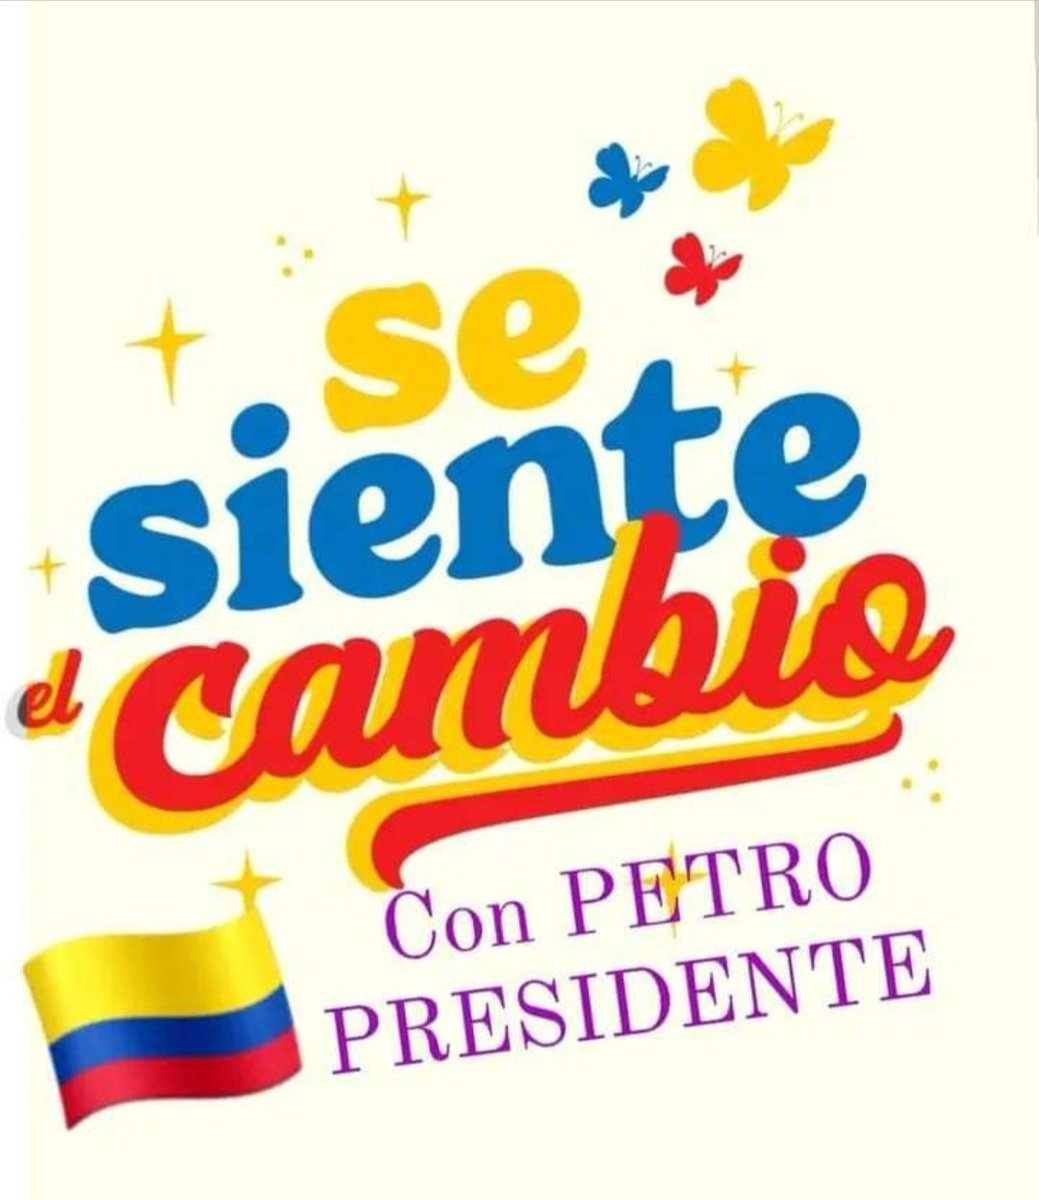 @LAPacifiKA @petrogustavo #ColombiaVaBien